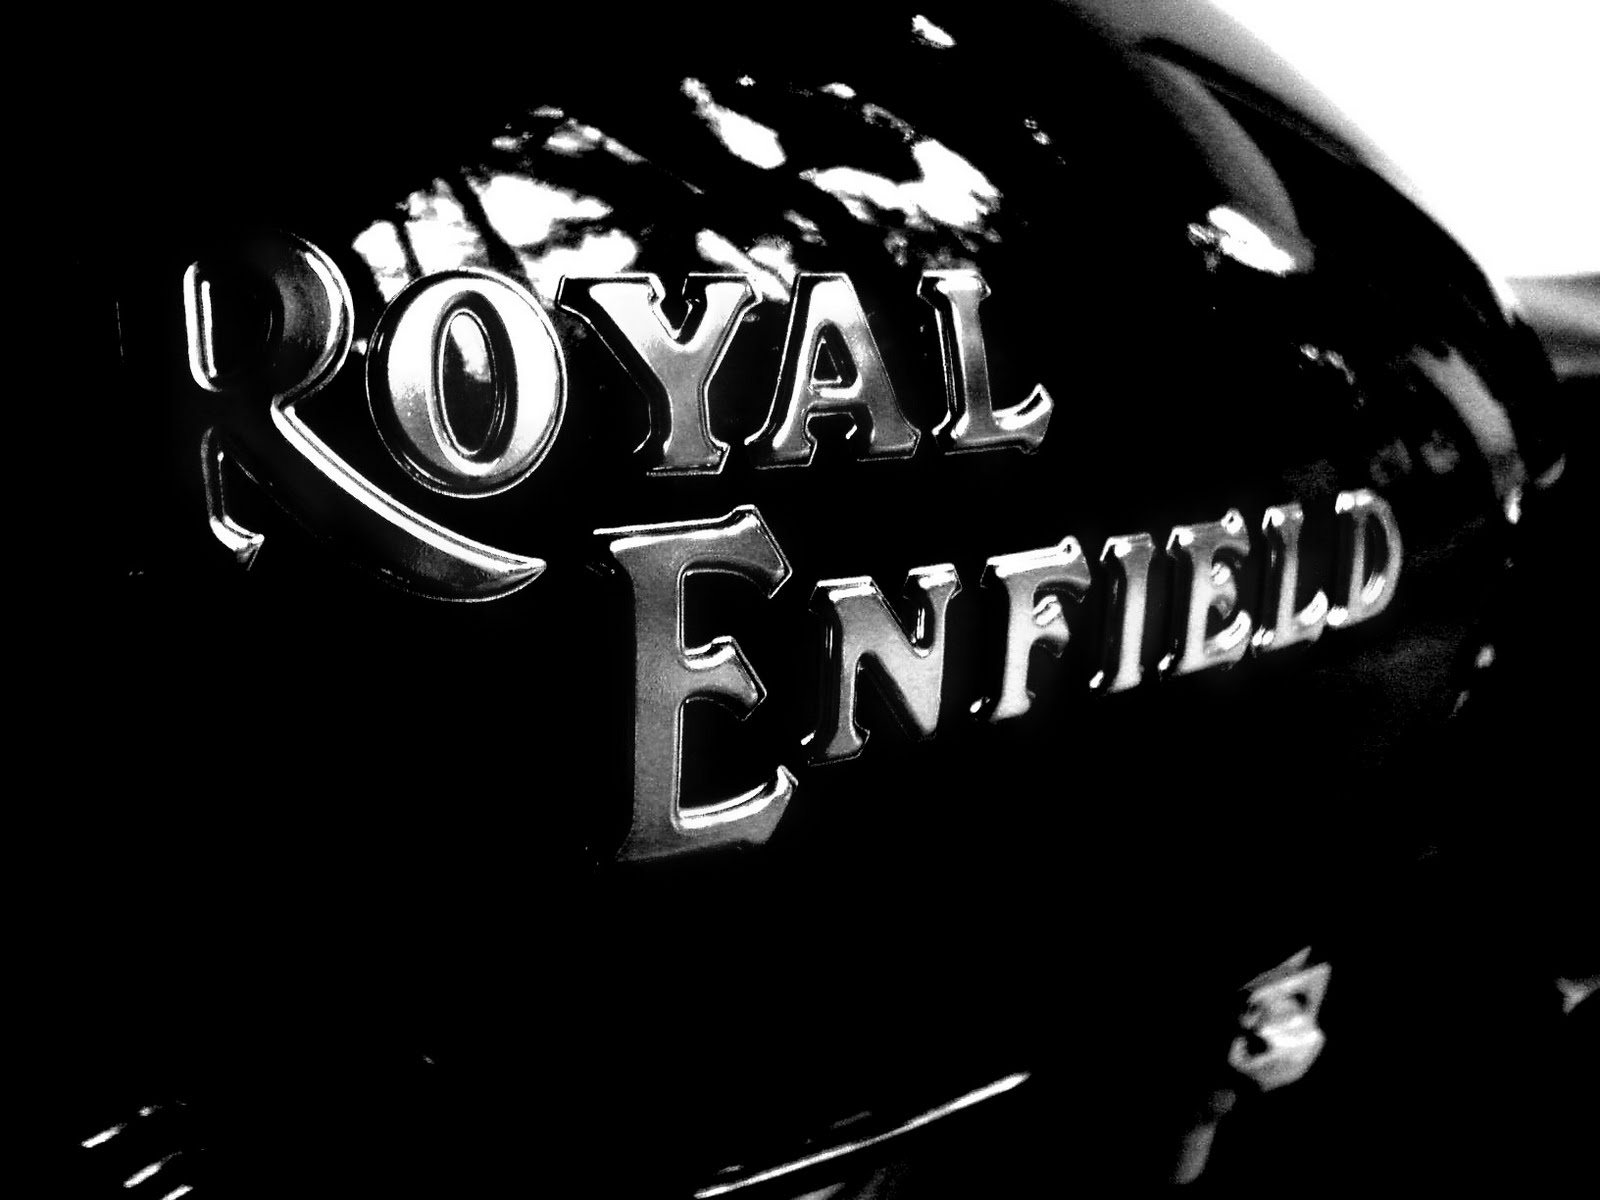 40+] Royal Enfield HD Wallpapers - WallpaperSafari